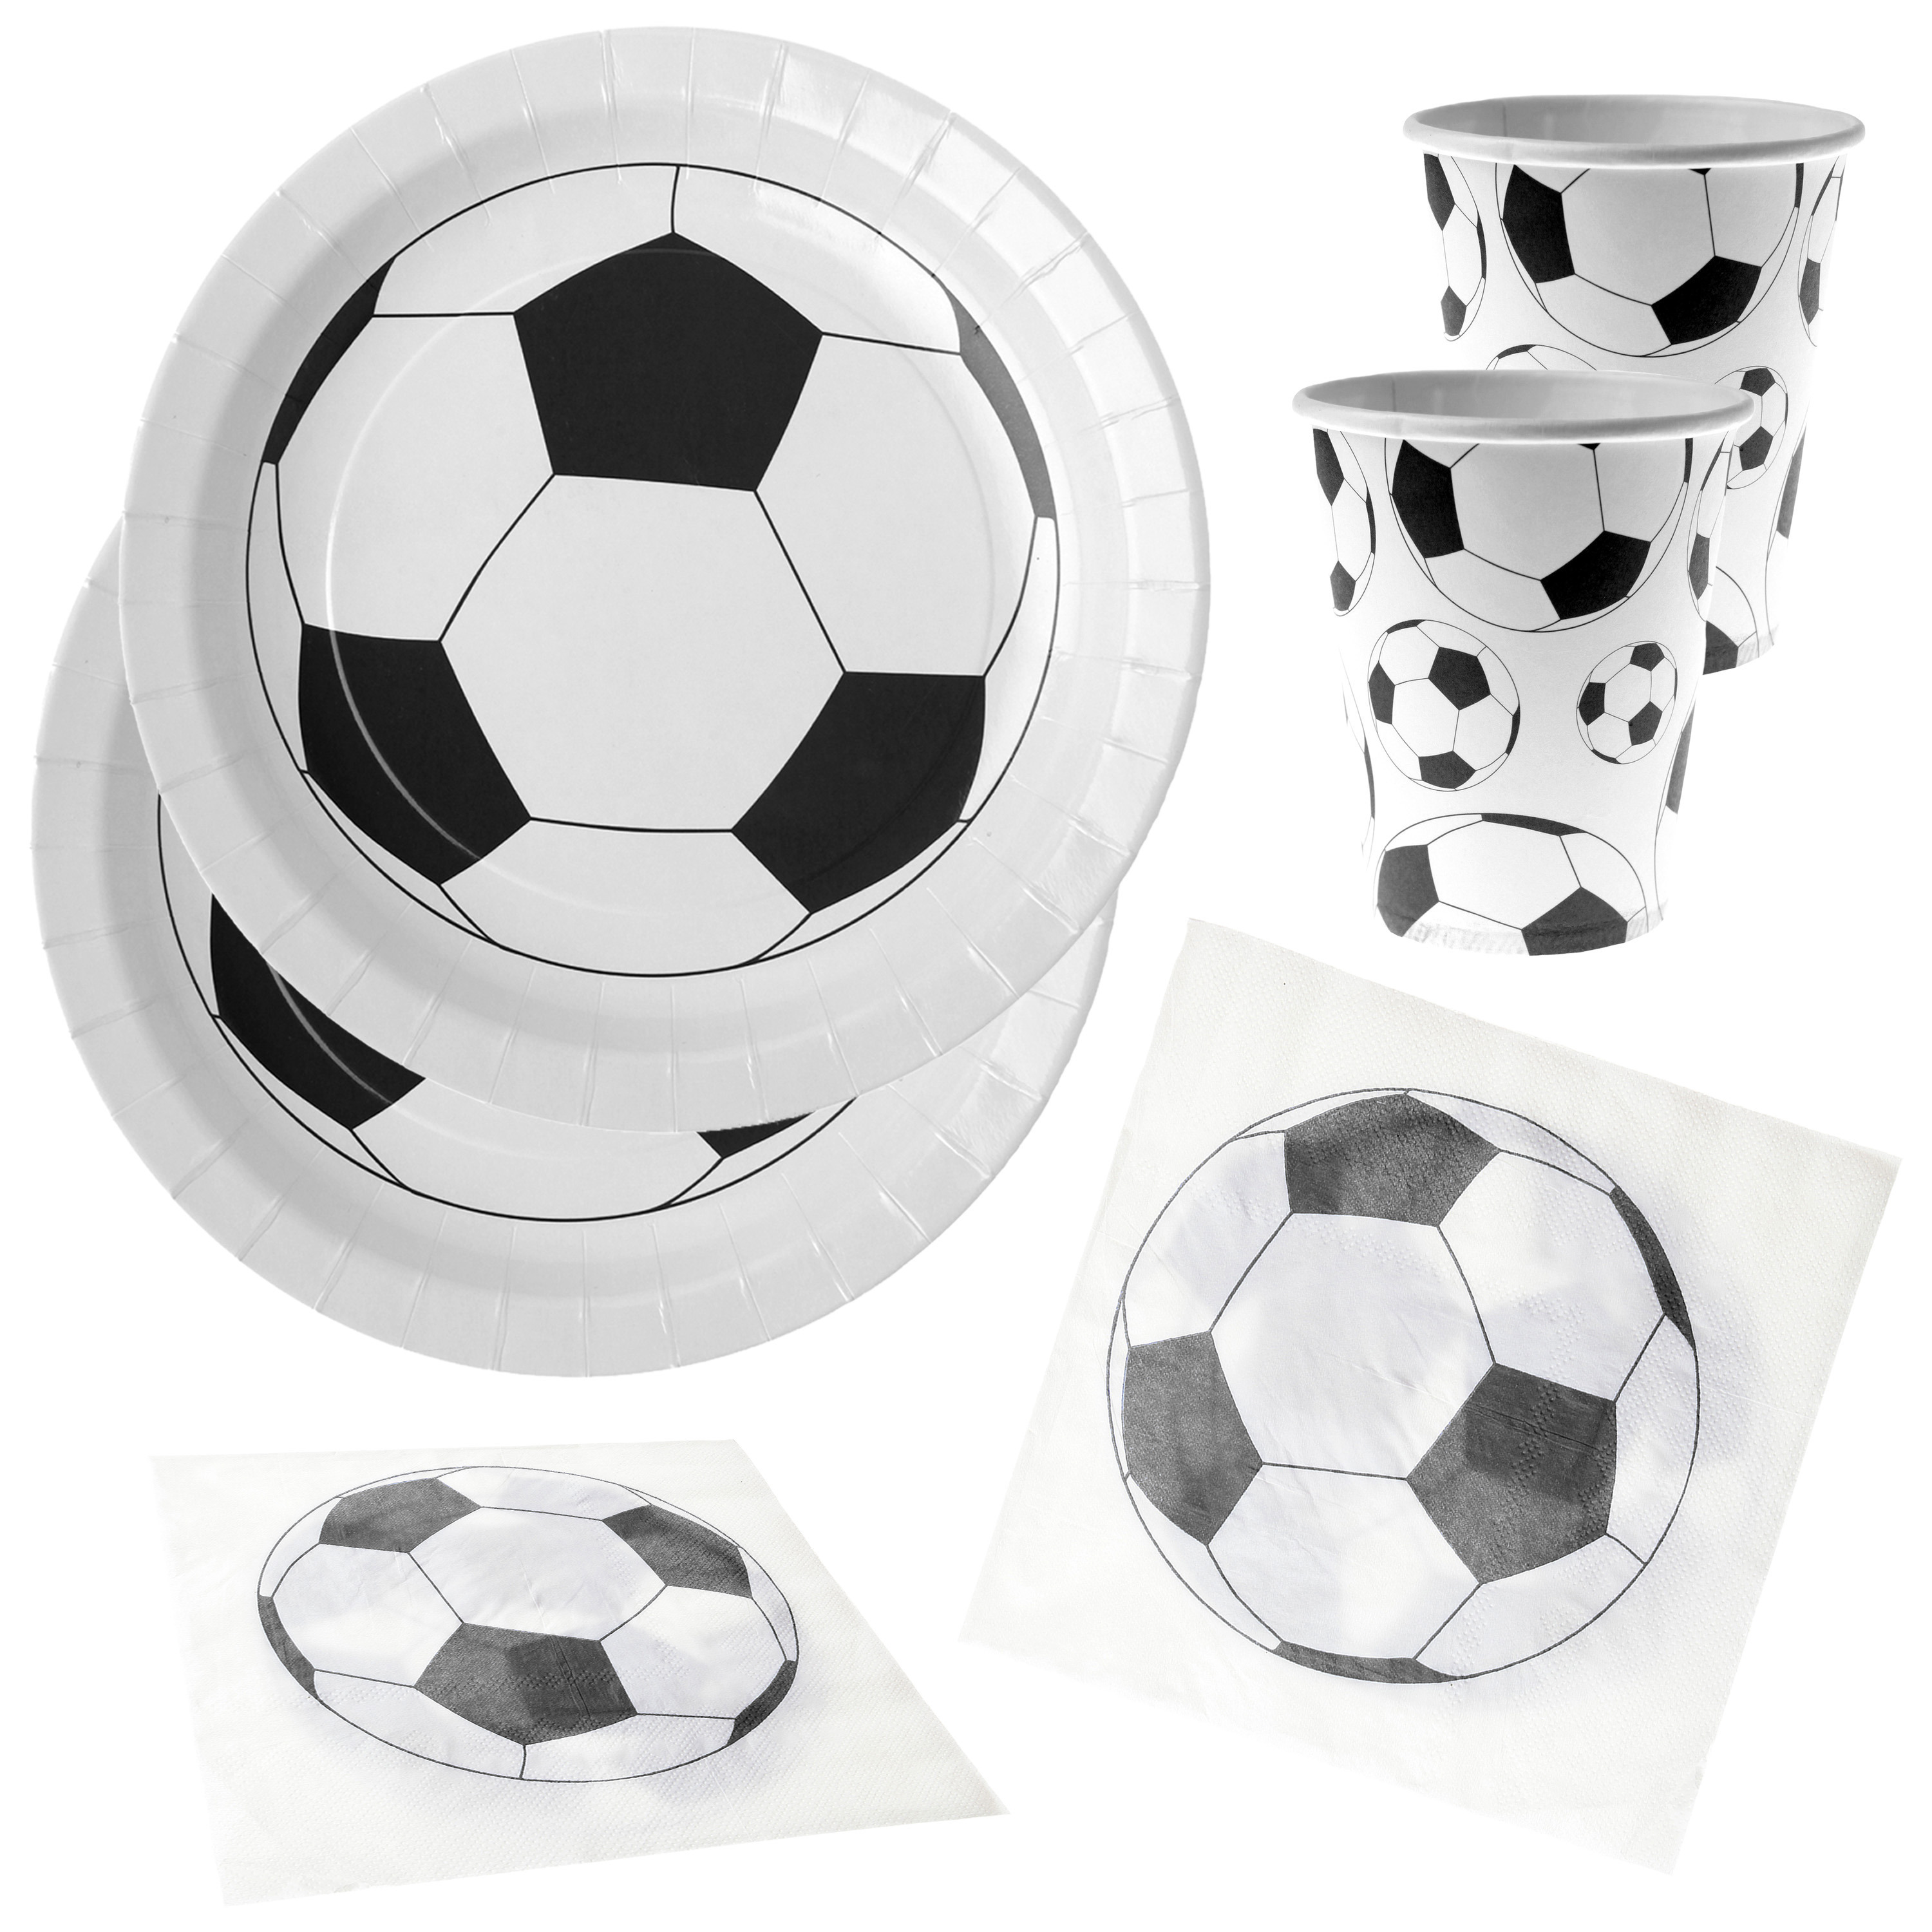 Voetbal thema feest wegwerp servies set 10x bordjes-10x bekers-20x servetten wit-zwart